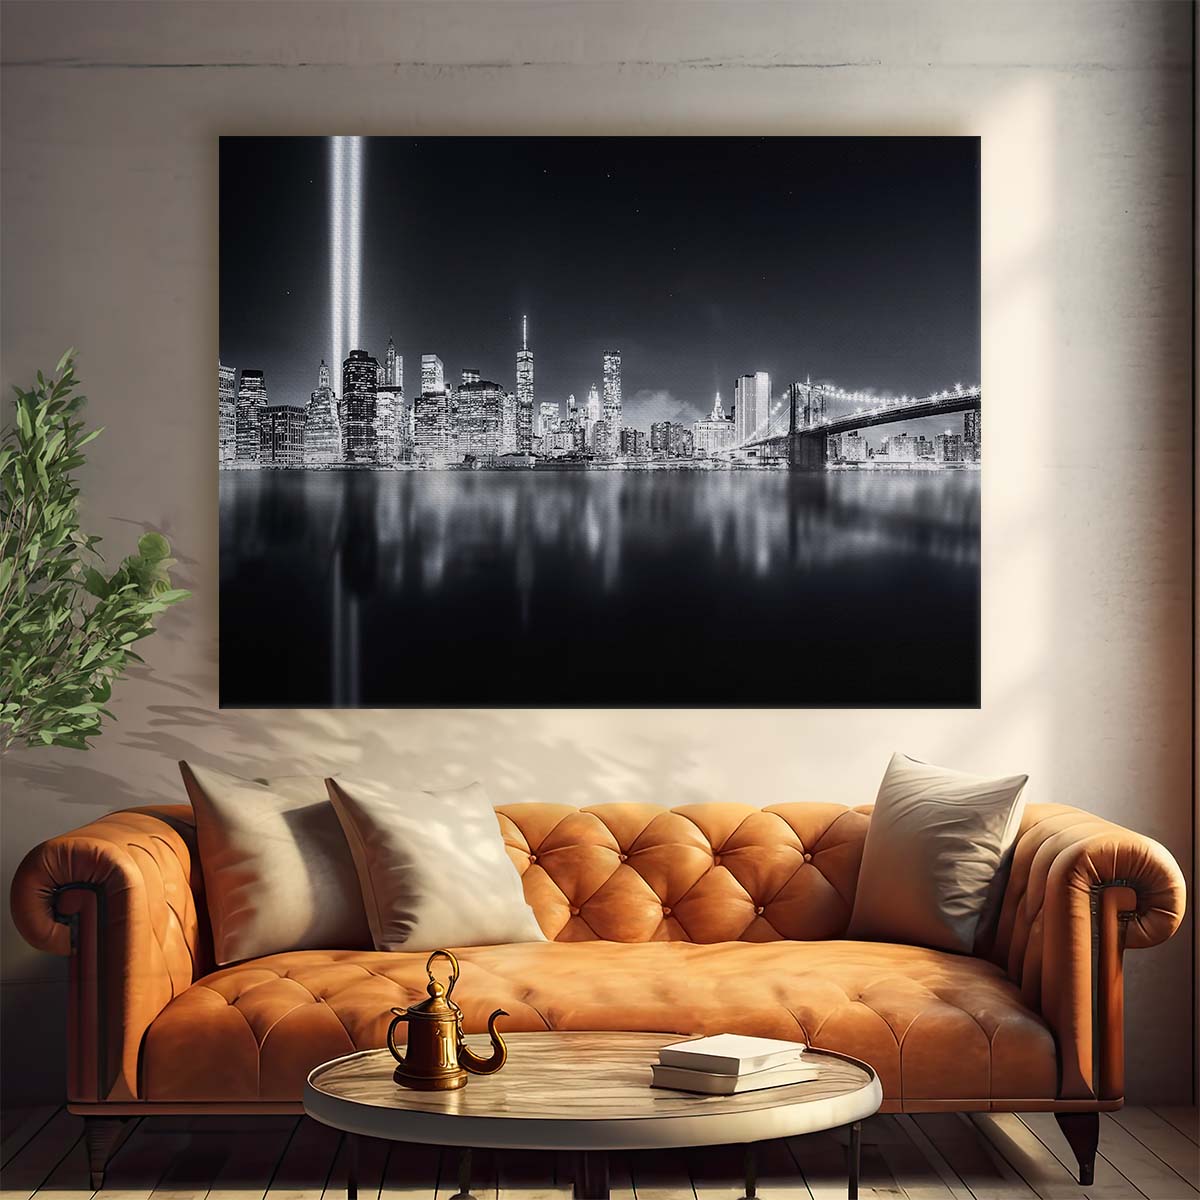 NYC Skyline & Brooklyn Bridge Night Panorama Wall Art by Luxuriance Designs. Made in USA.